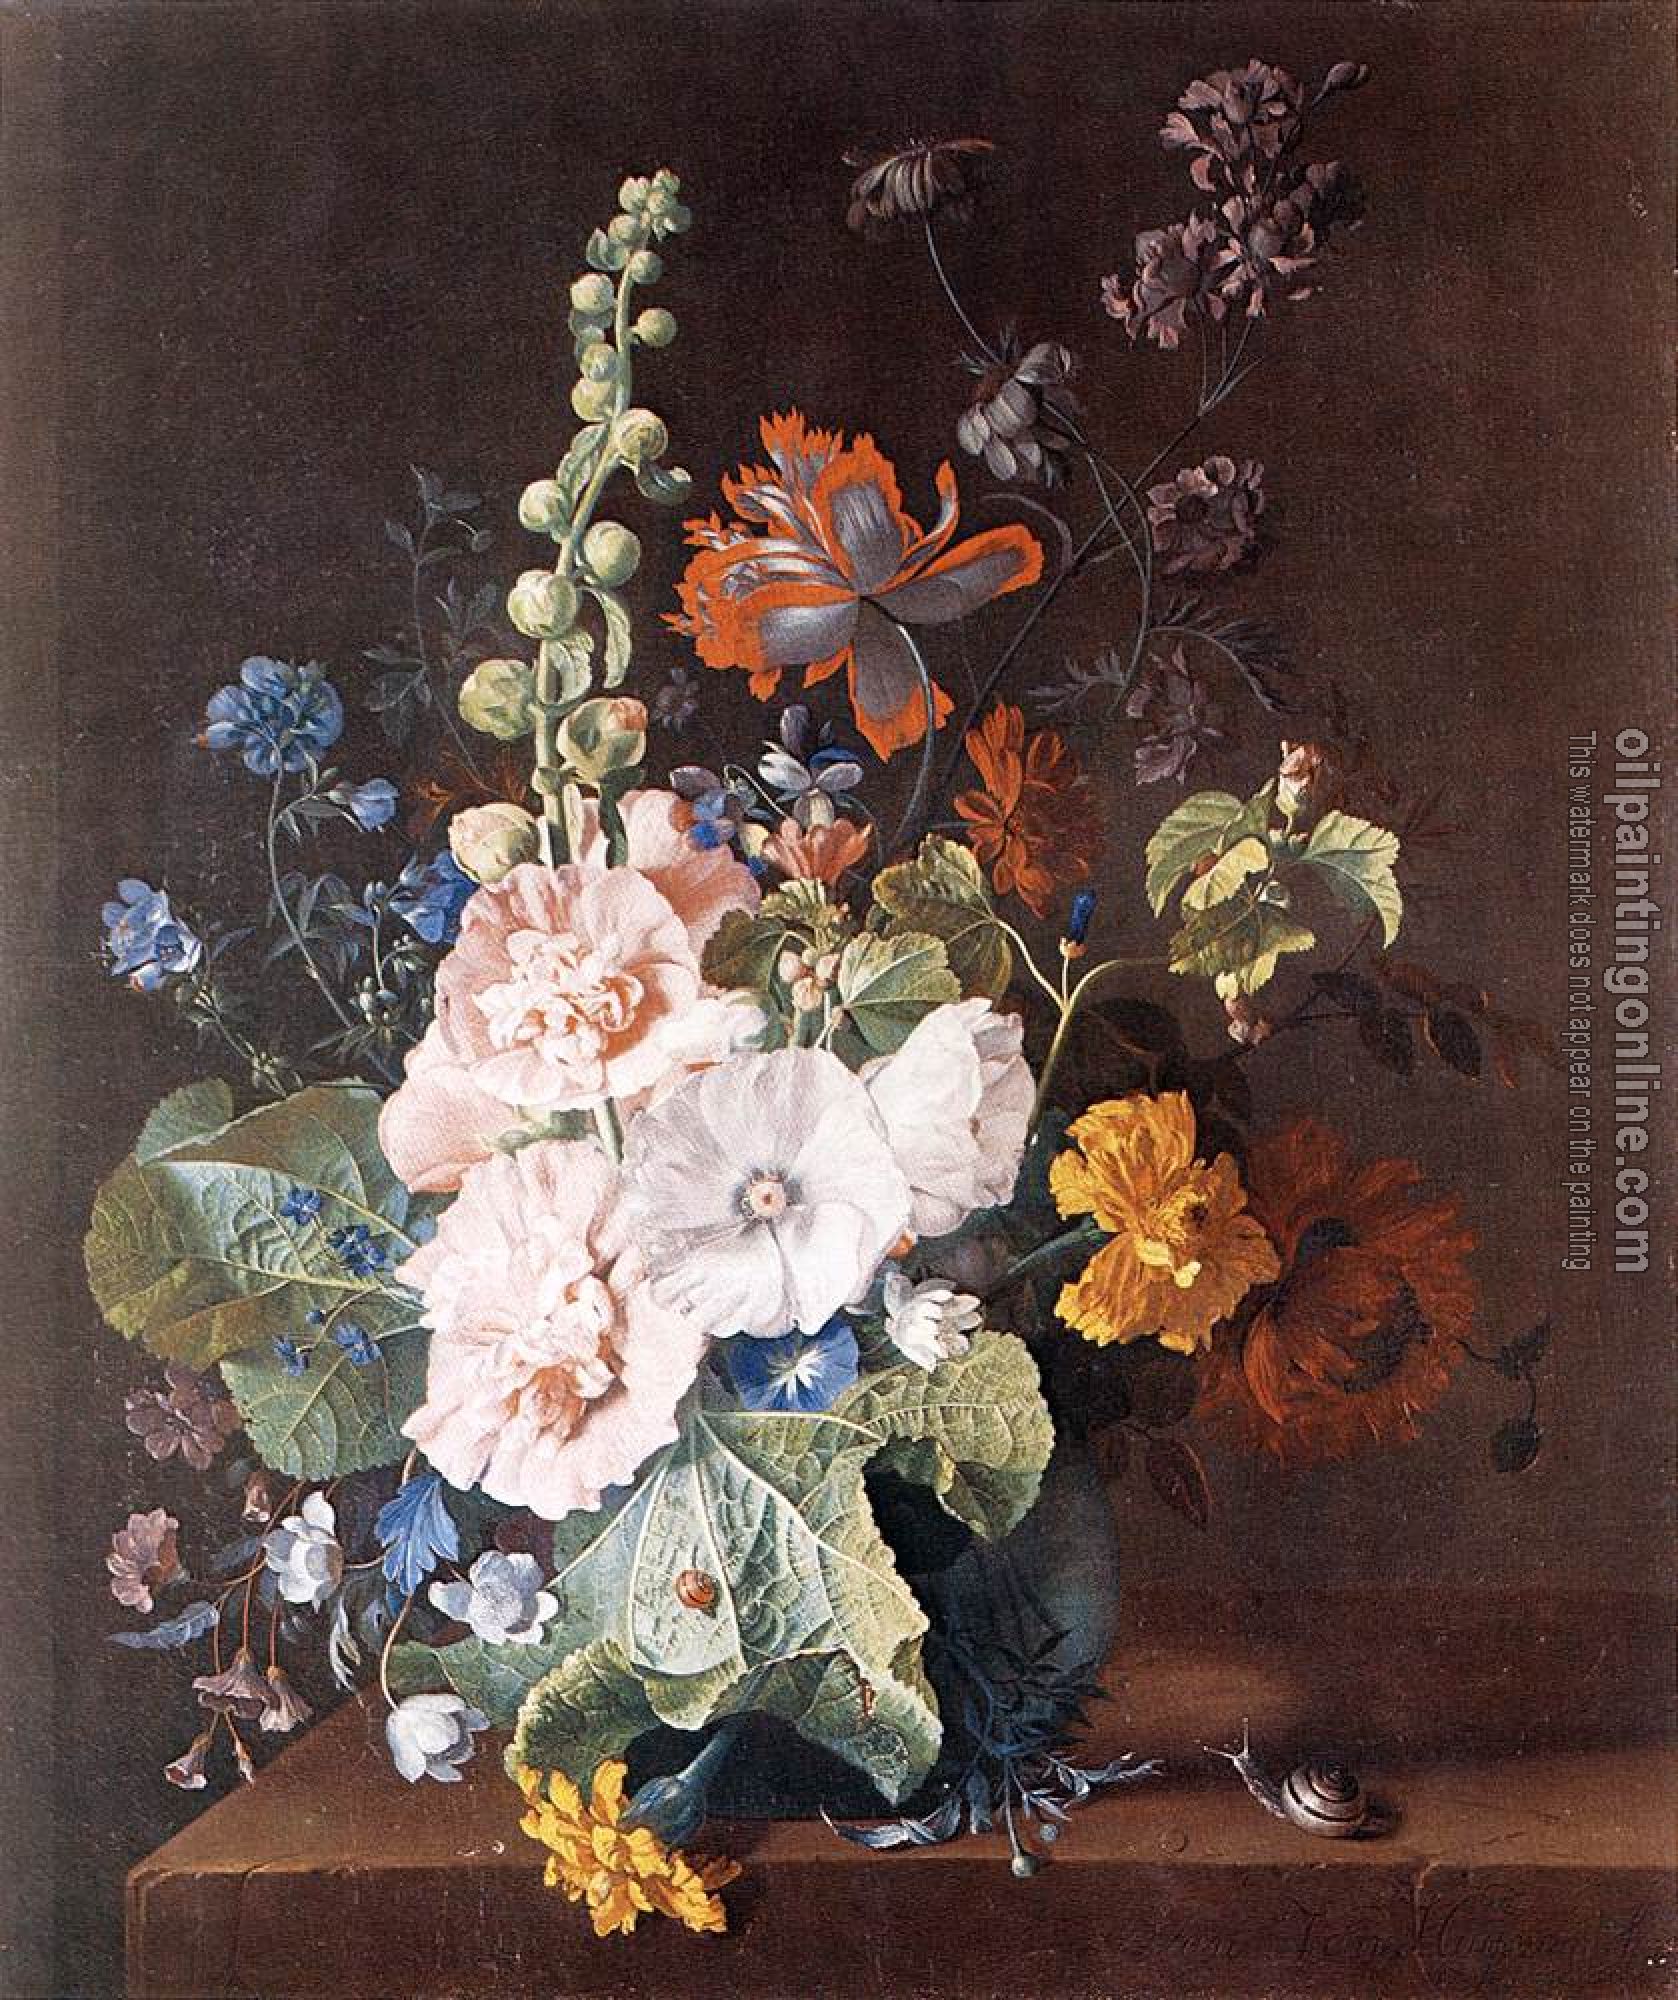 Huysum, Jan van - Hollyhocks and Other Flowers in a Vase